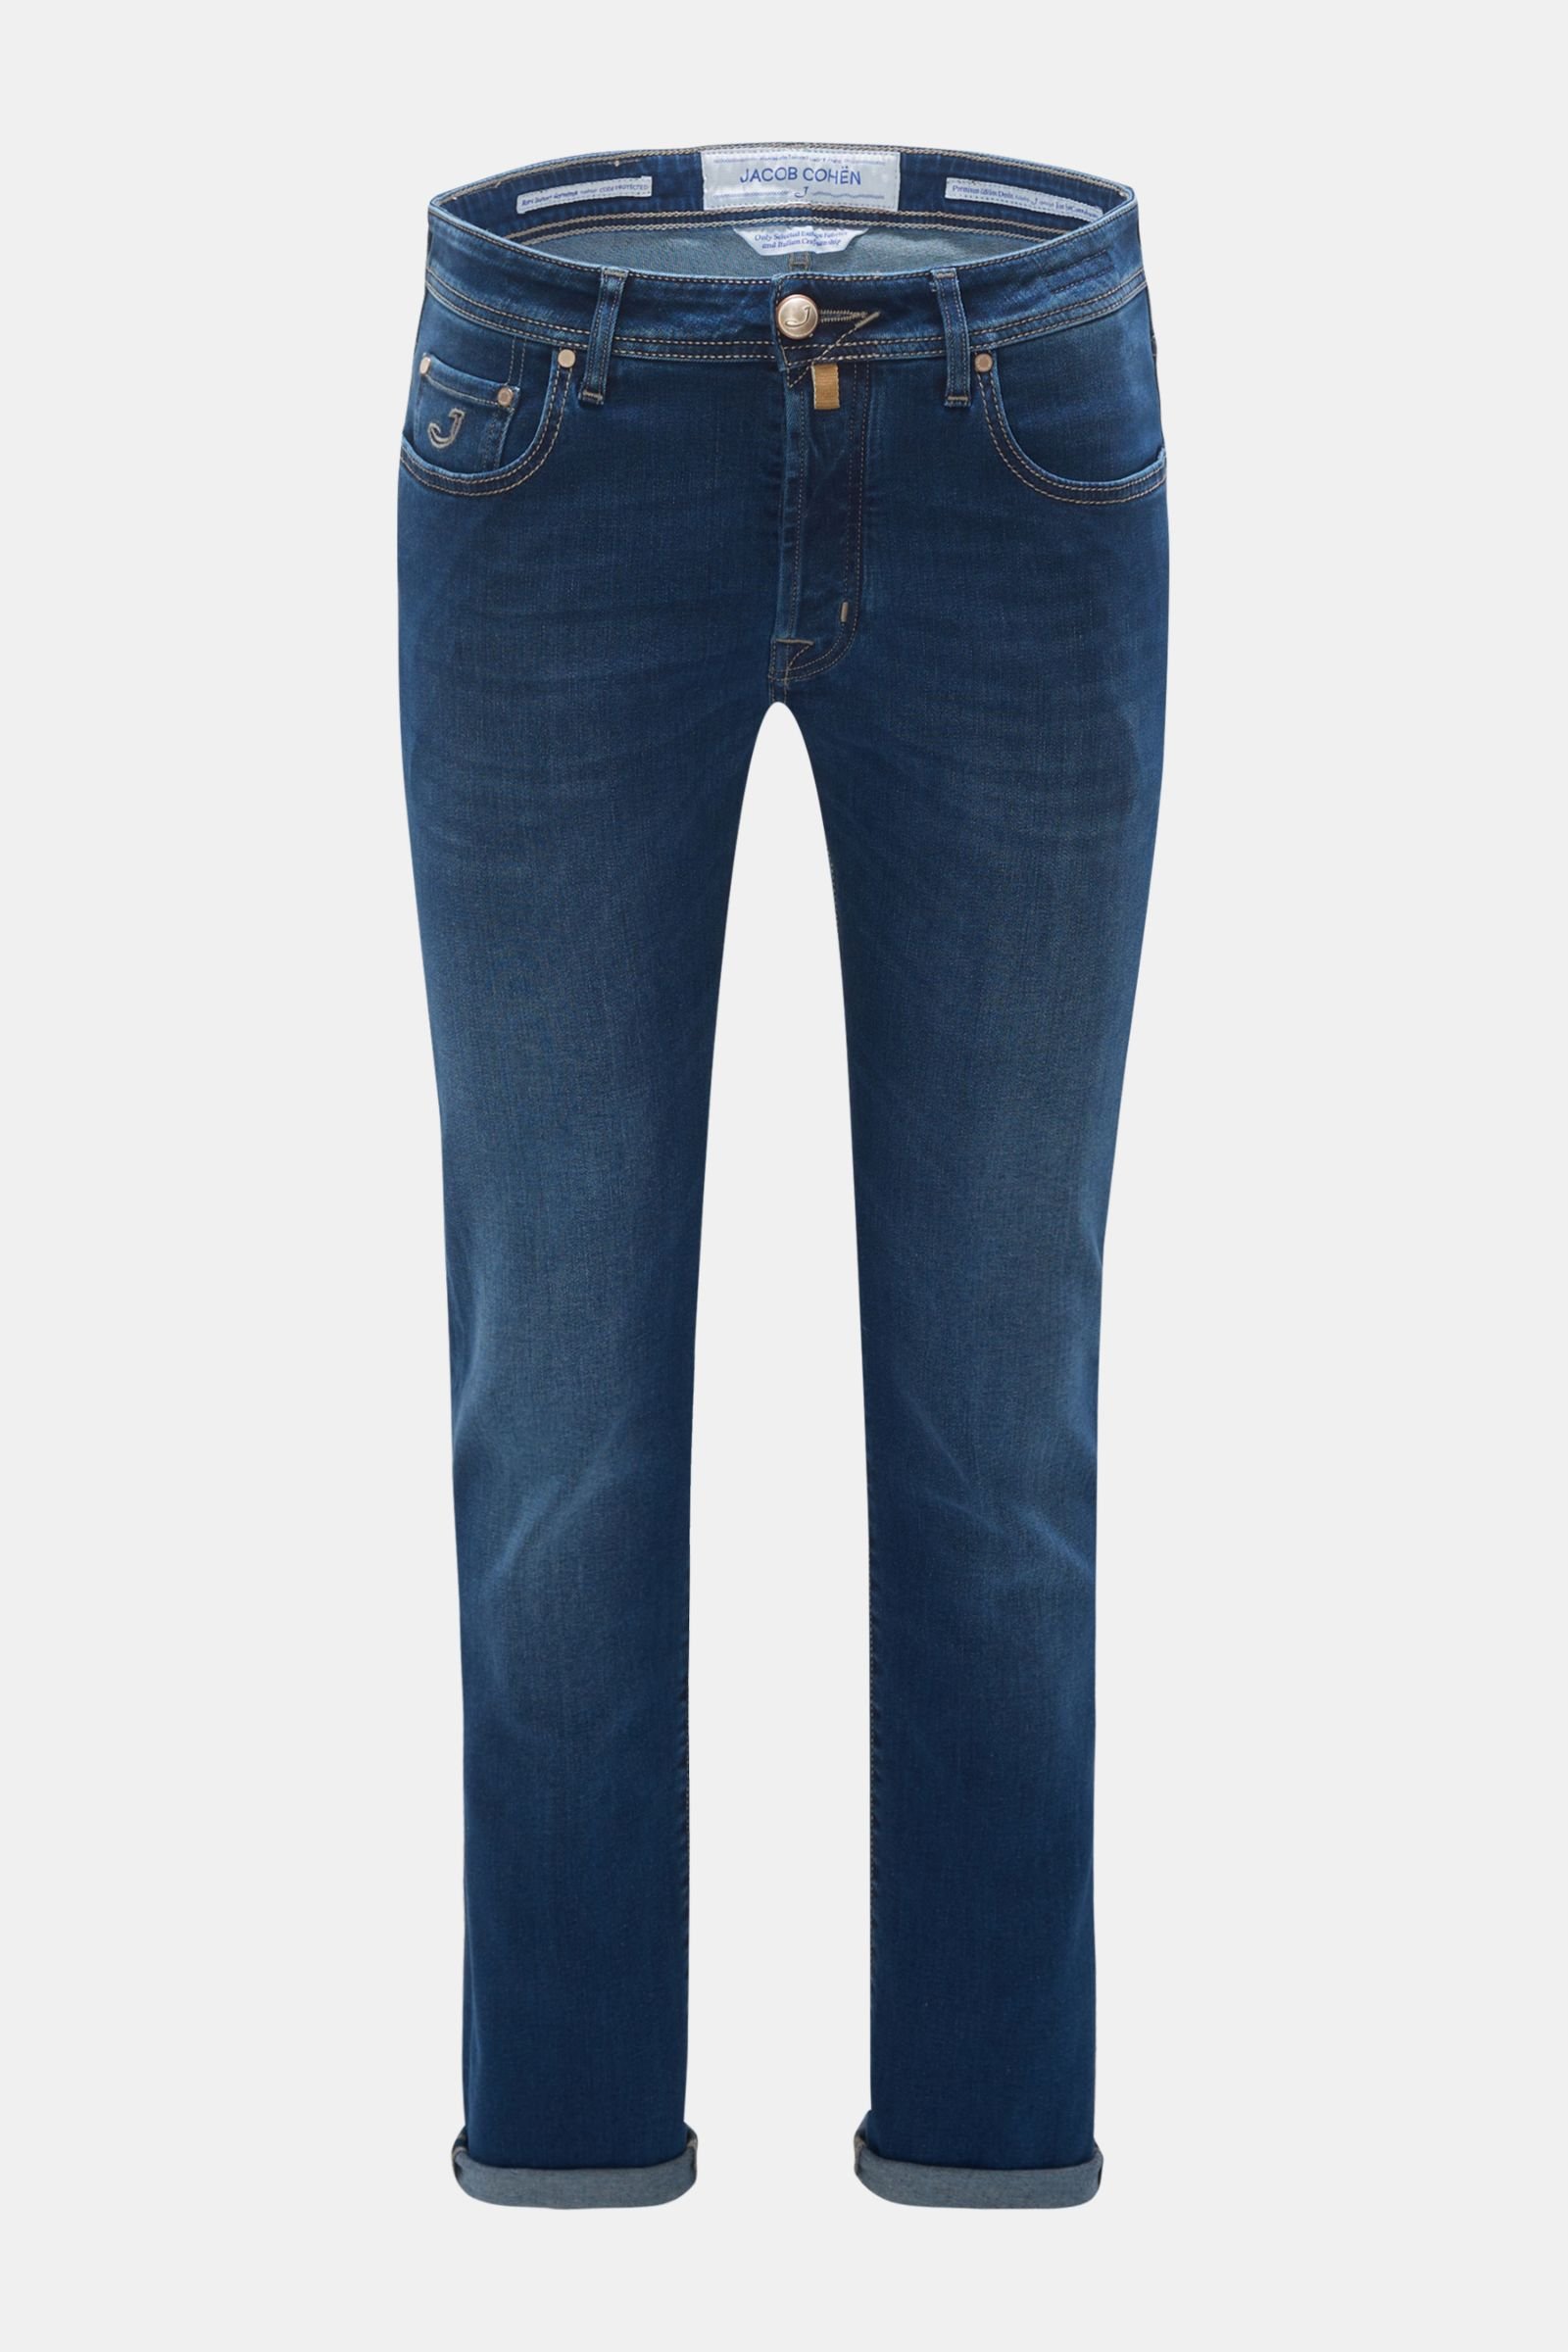 Jeans 'J688 Comfort Slim Fit' dark blue